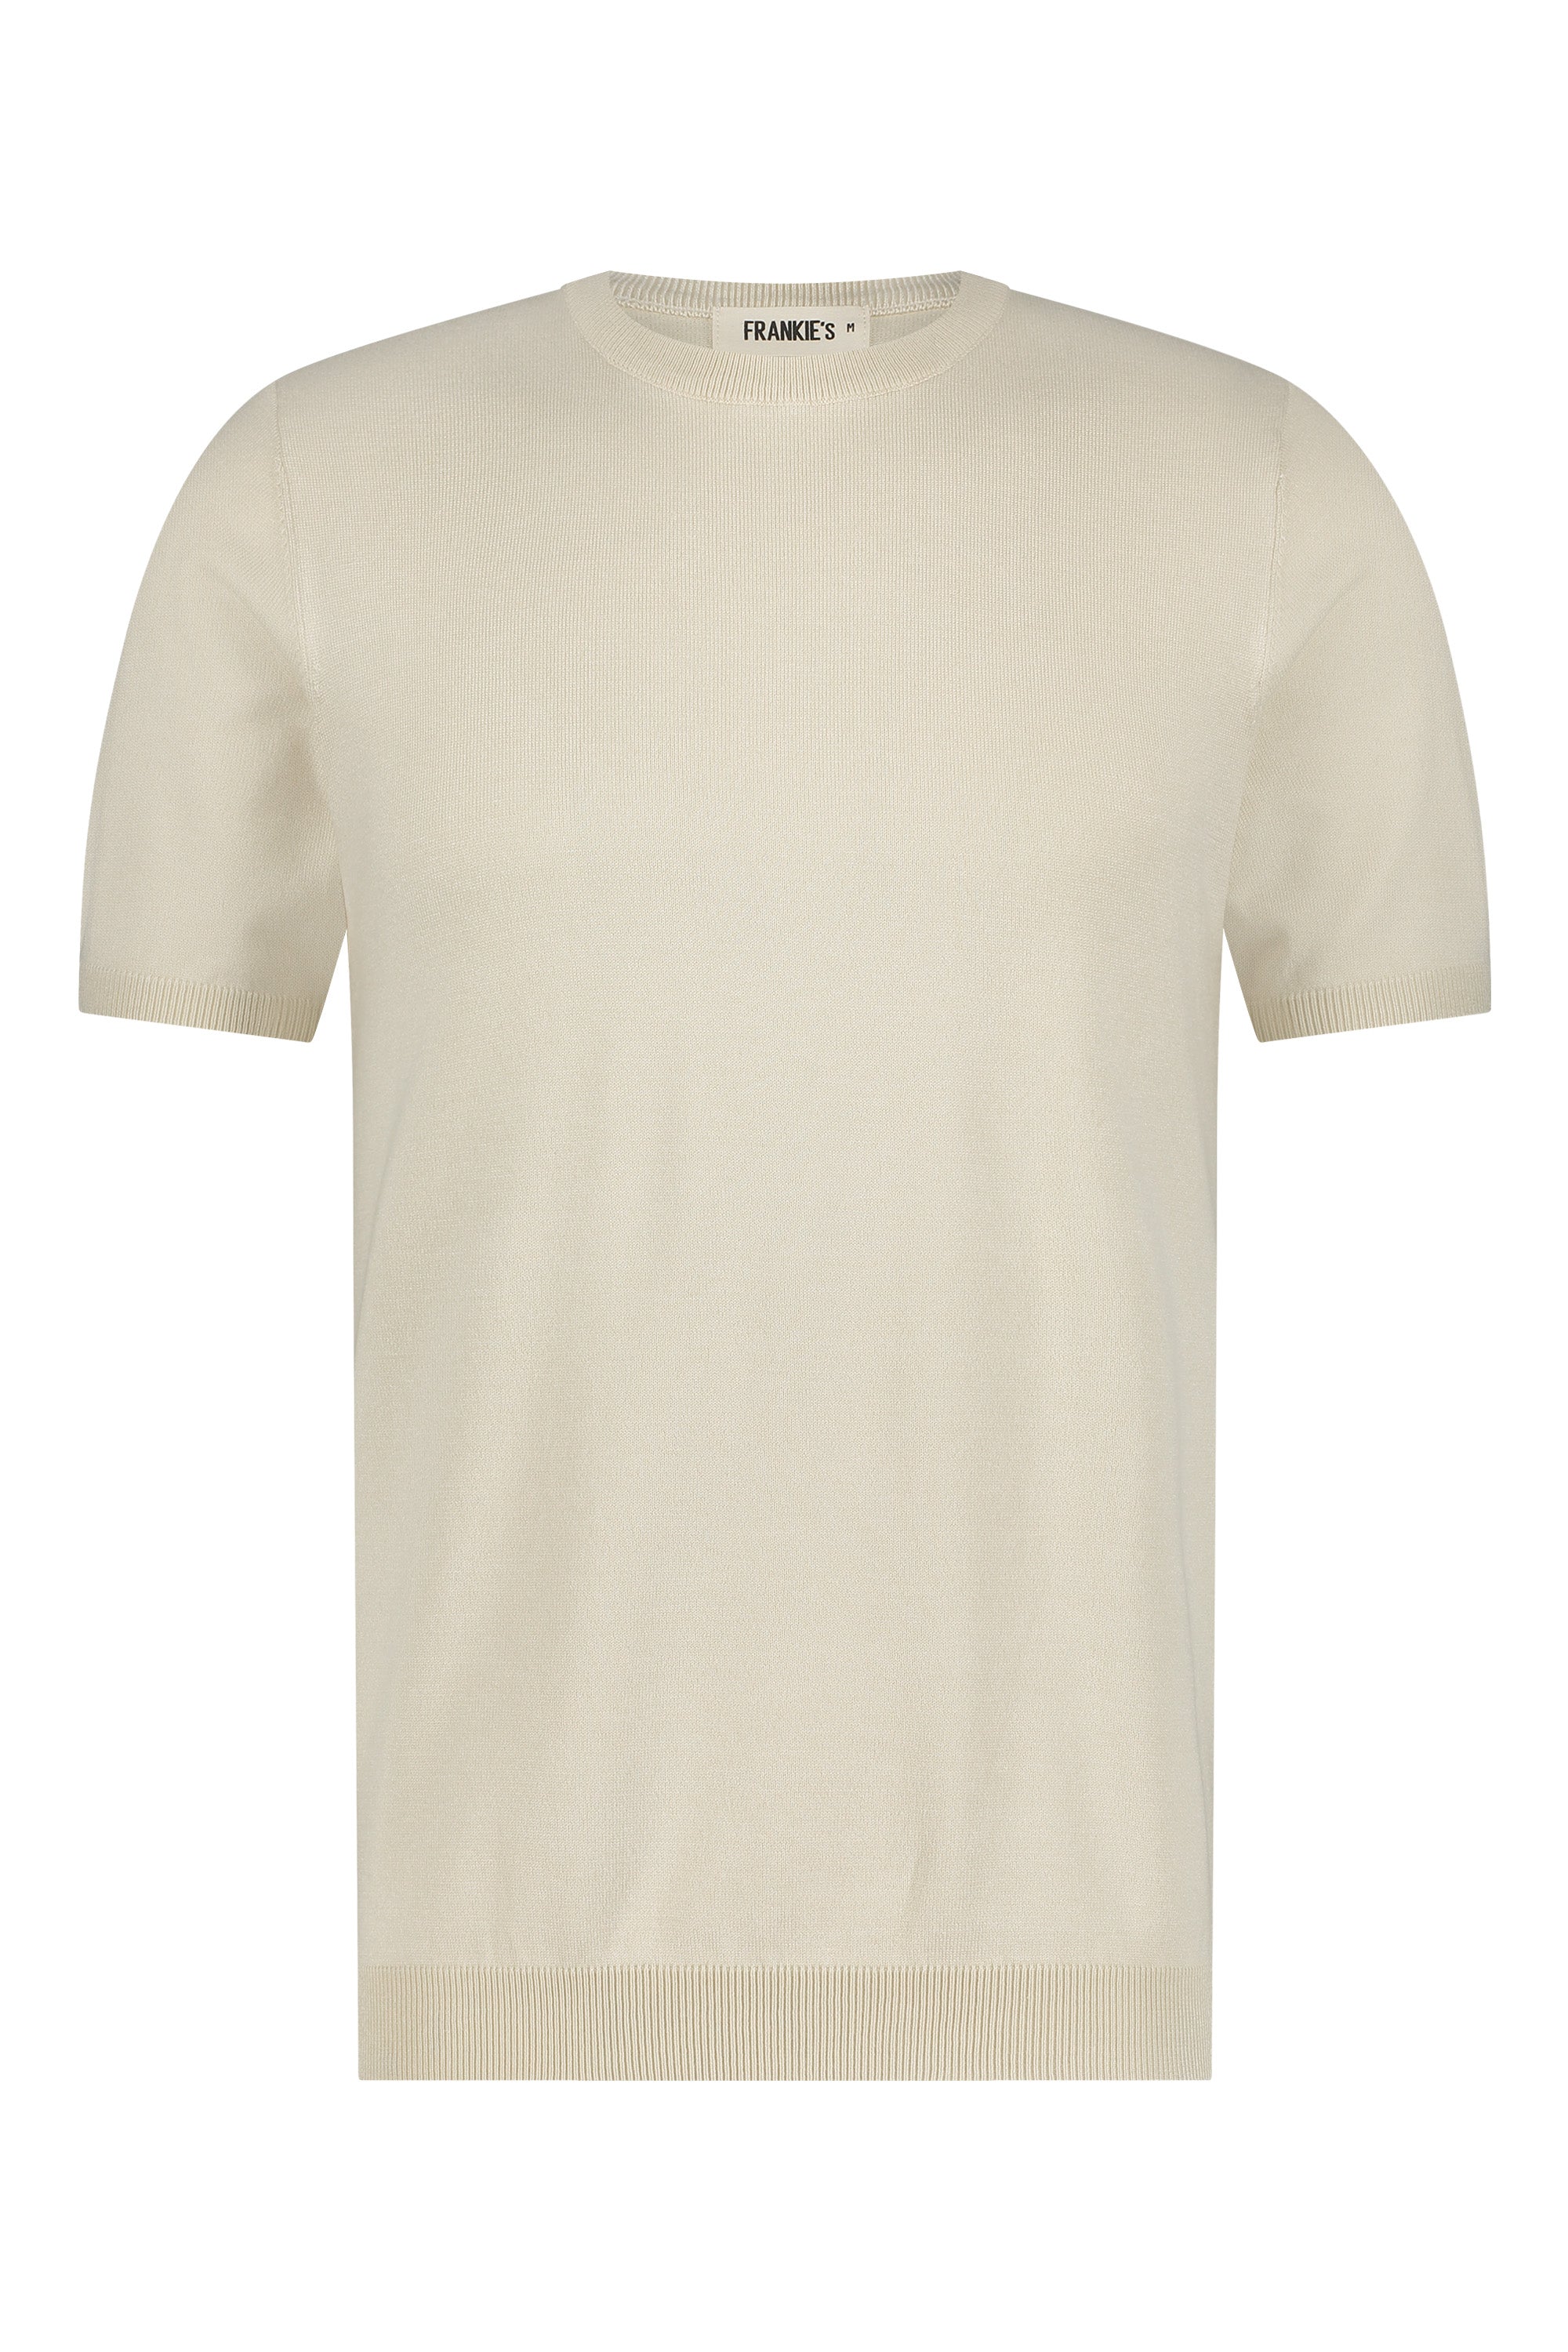 T-shirt knitwear short sleeve beige